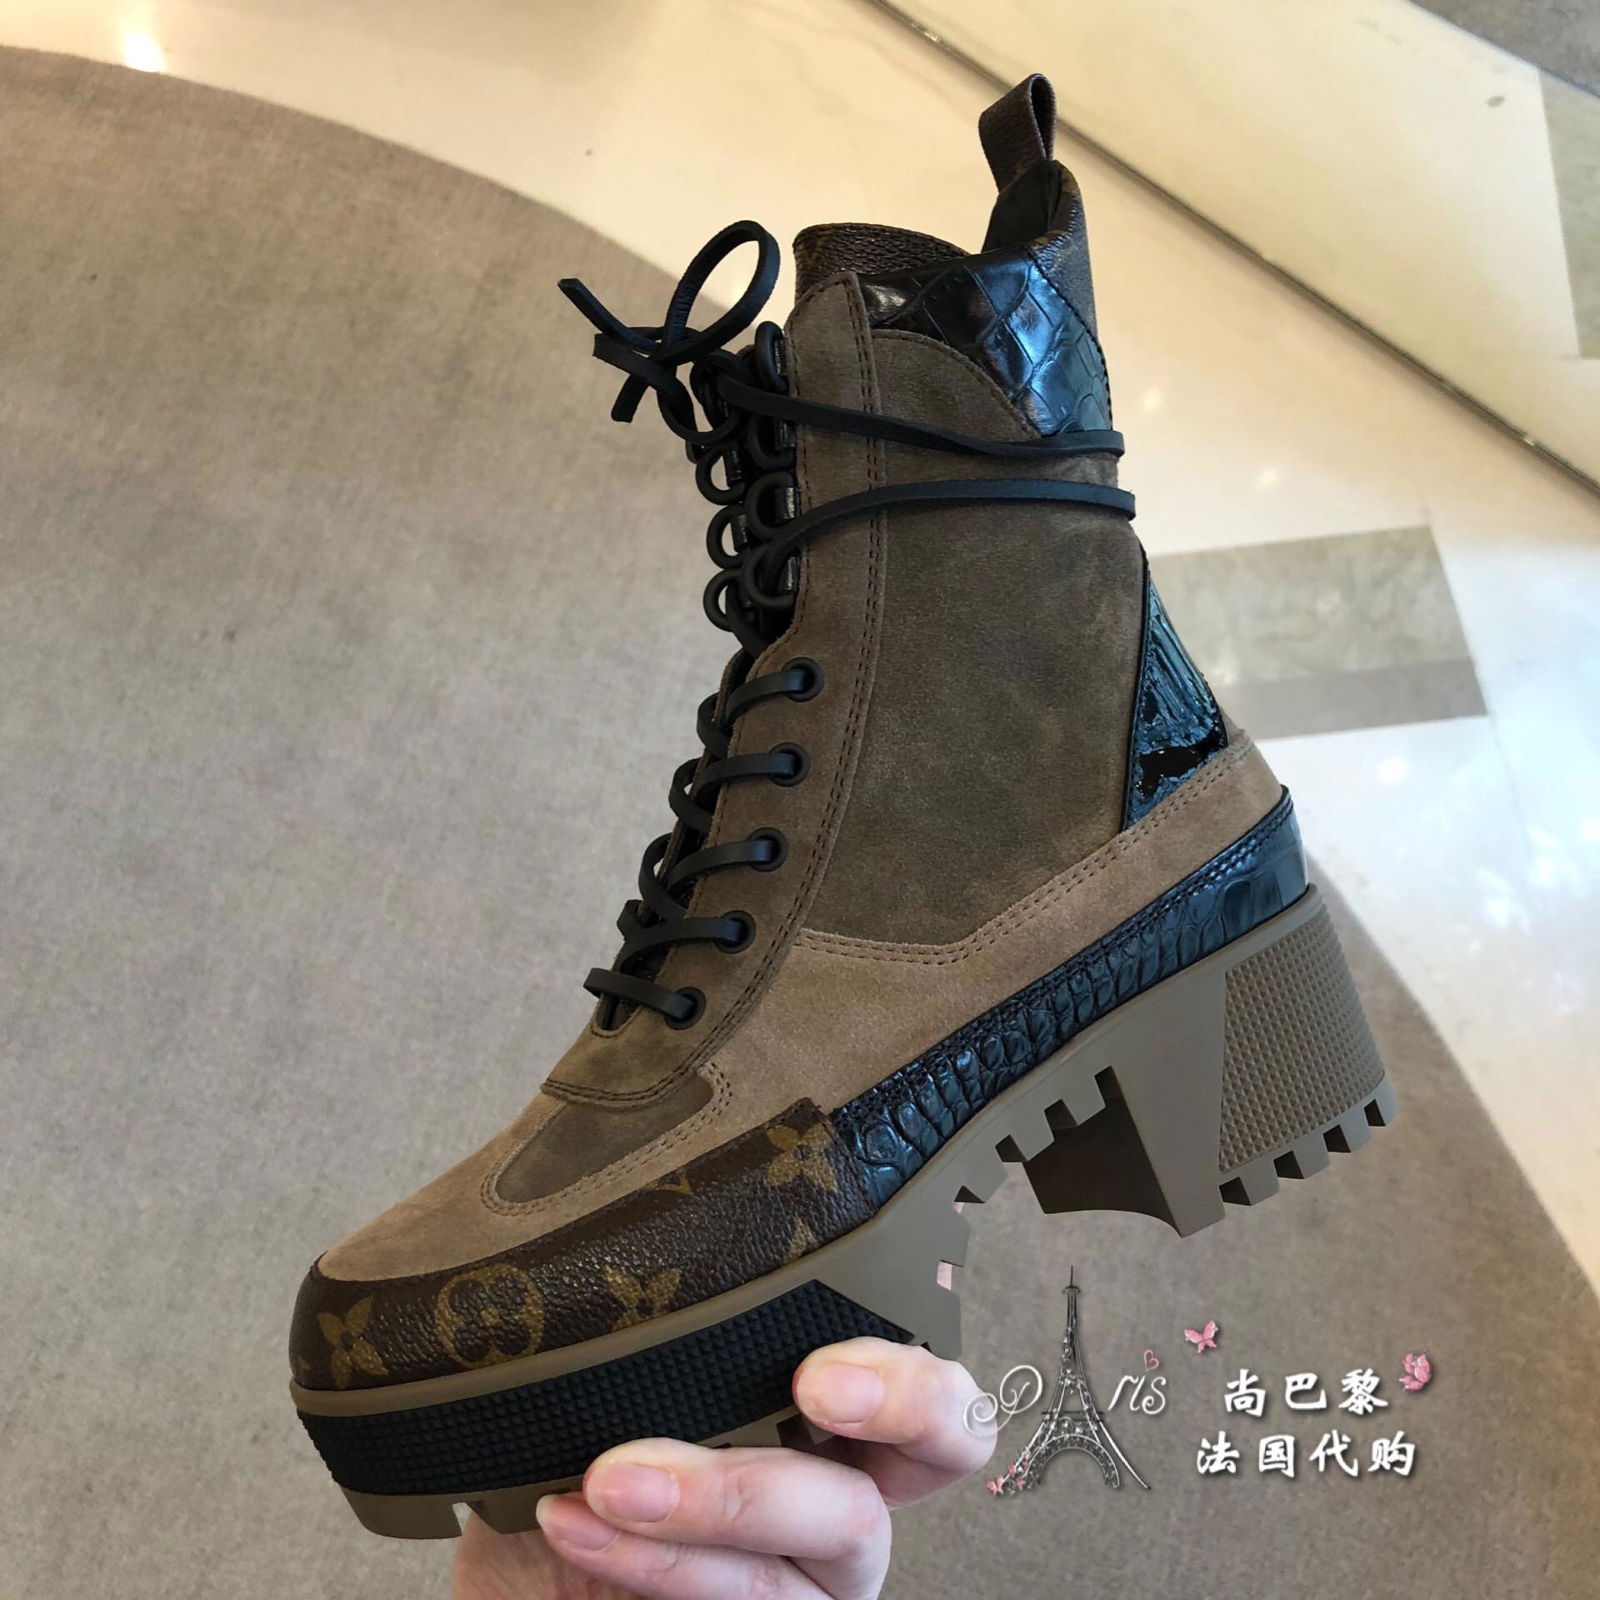                   aureate Platform Desert Boot 1A4XXZMonogram suede calf leather 4